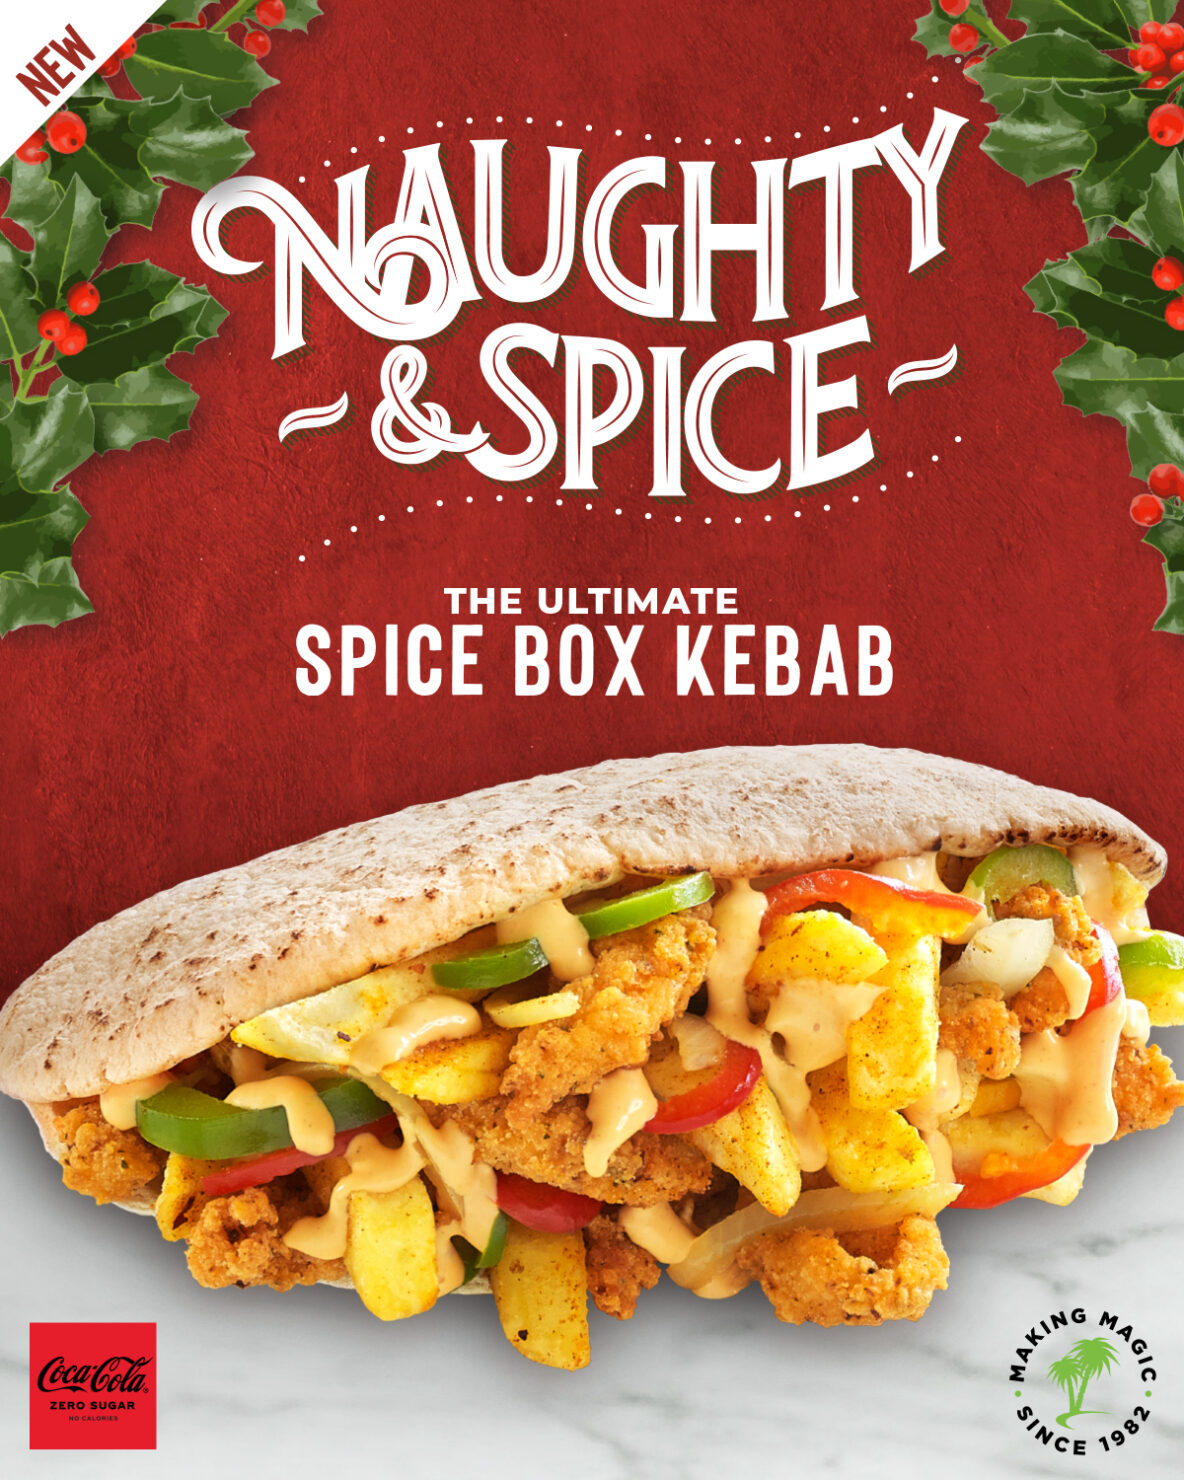 Abrakebabra's Ultimate Spice Box Kebab